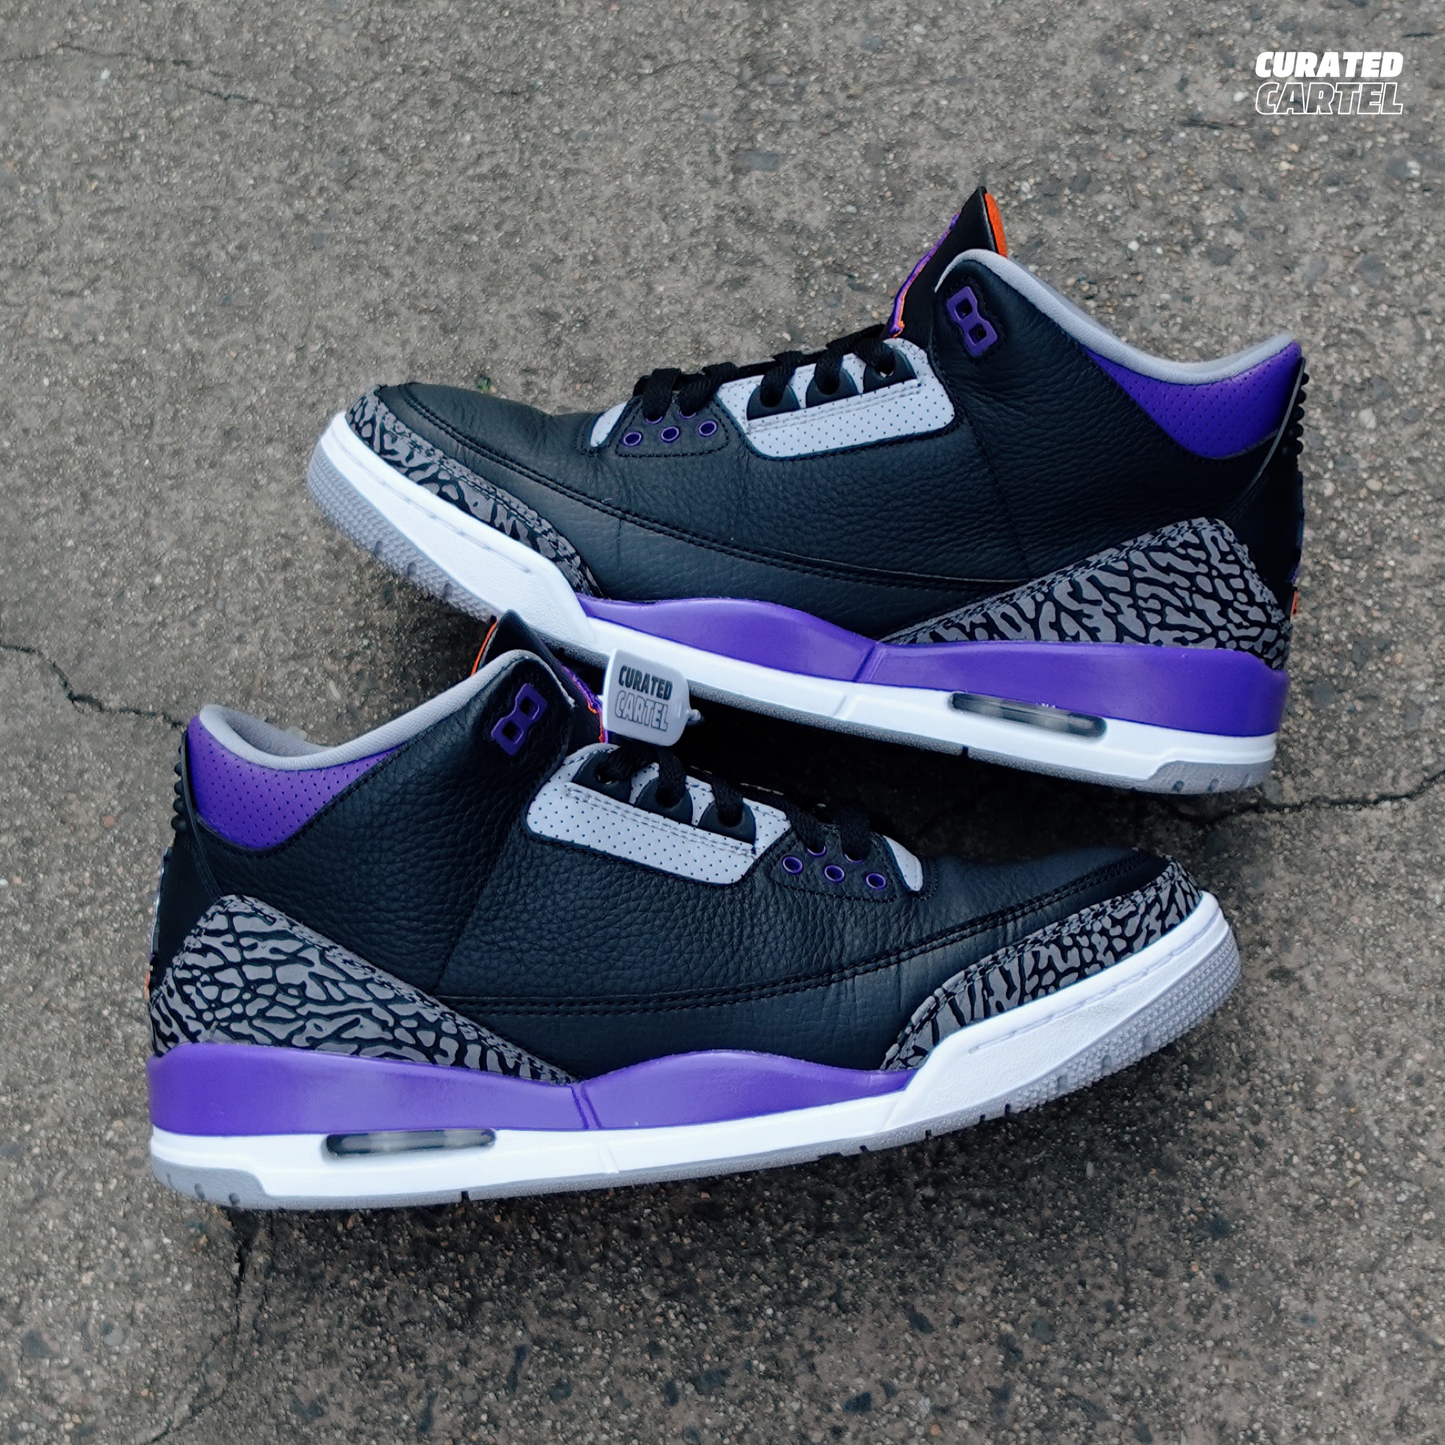 Jordan 3 Retro “Court Purple” US11